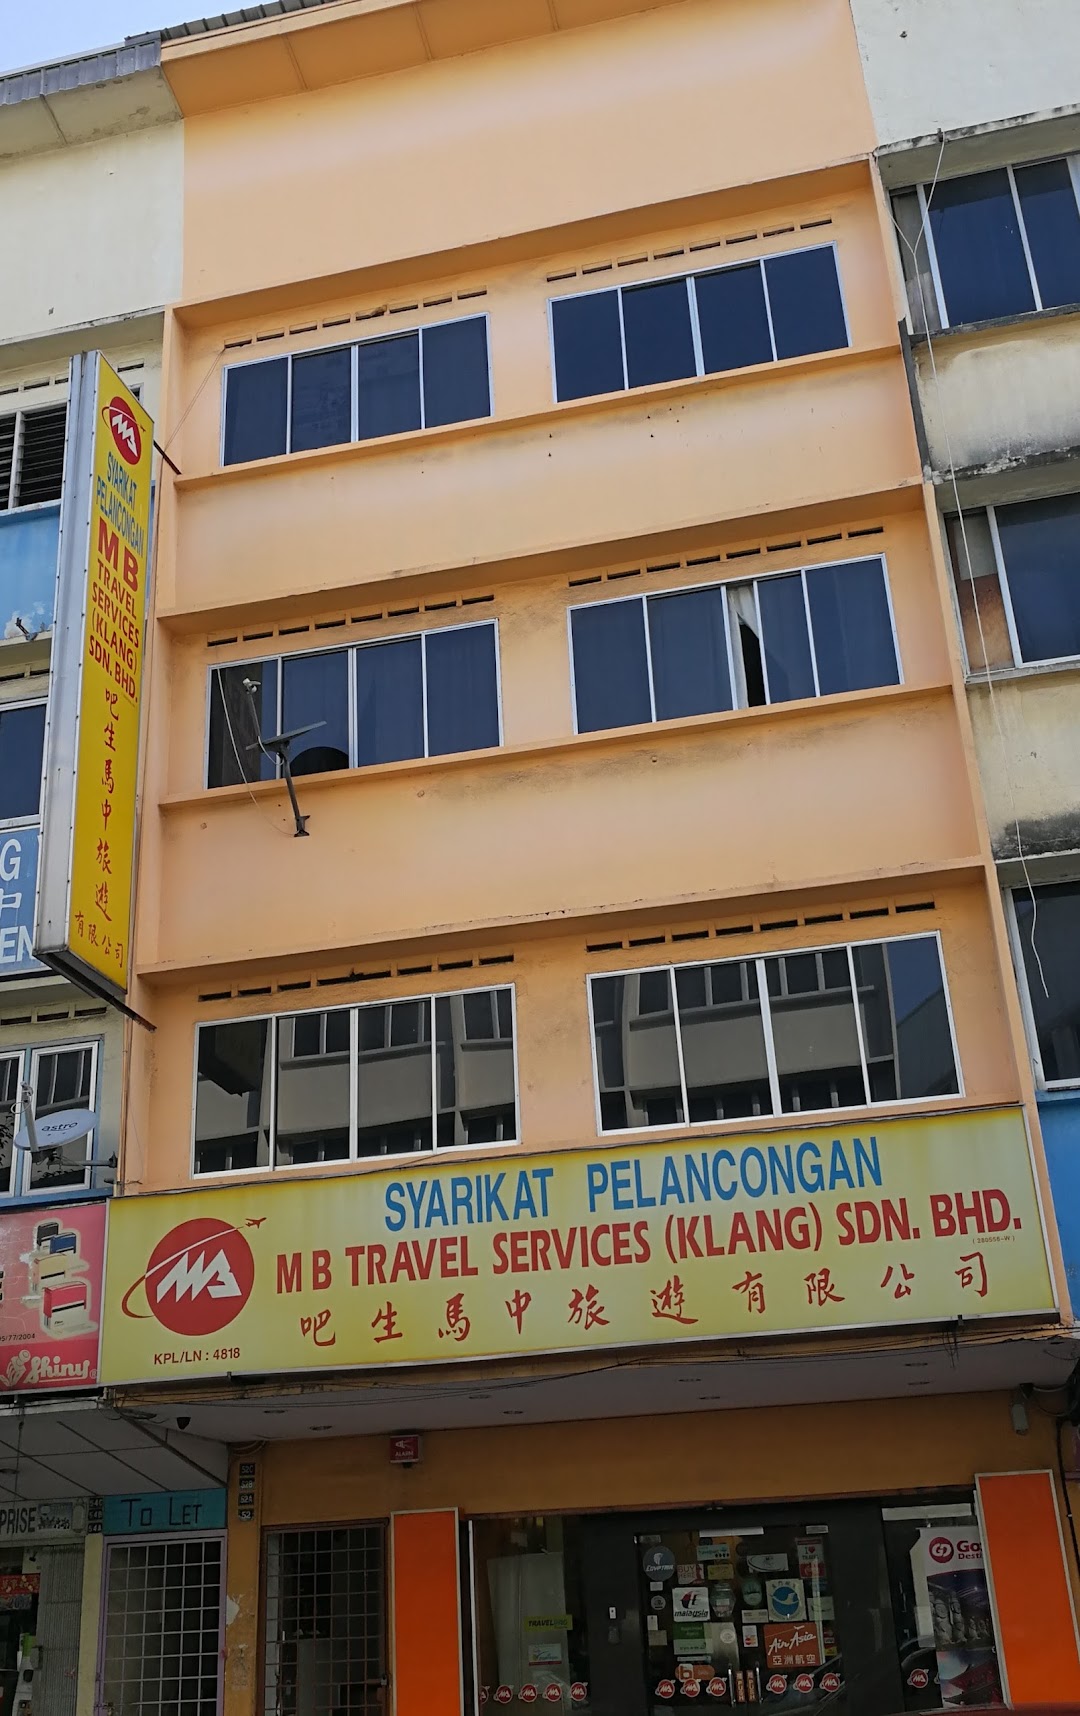 M B Travel Services (Klang) Sdn. Bhd.